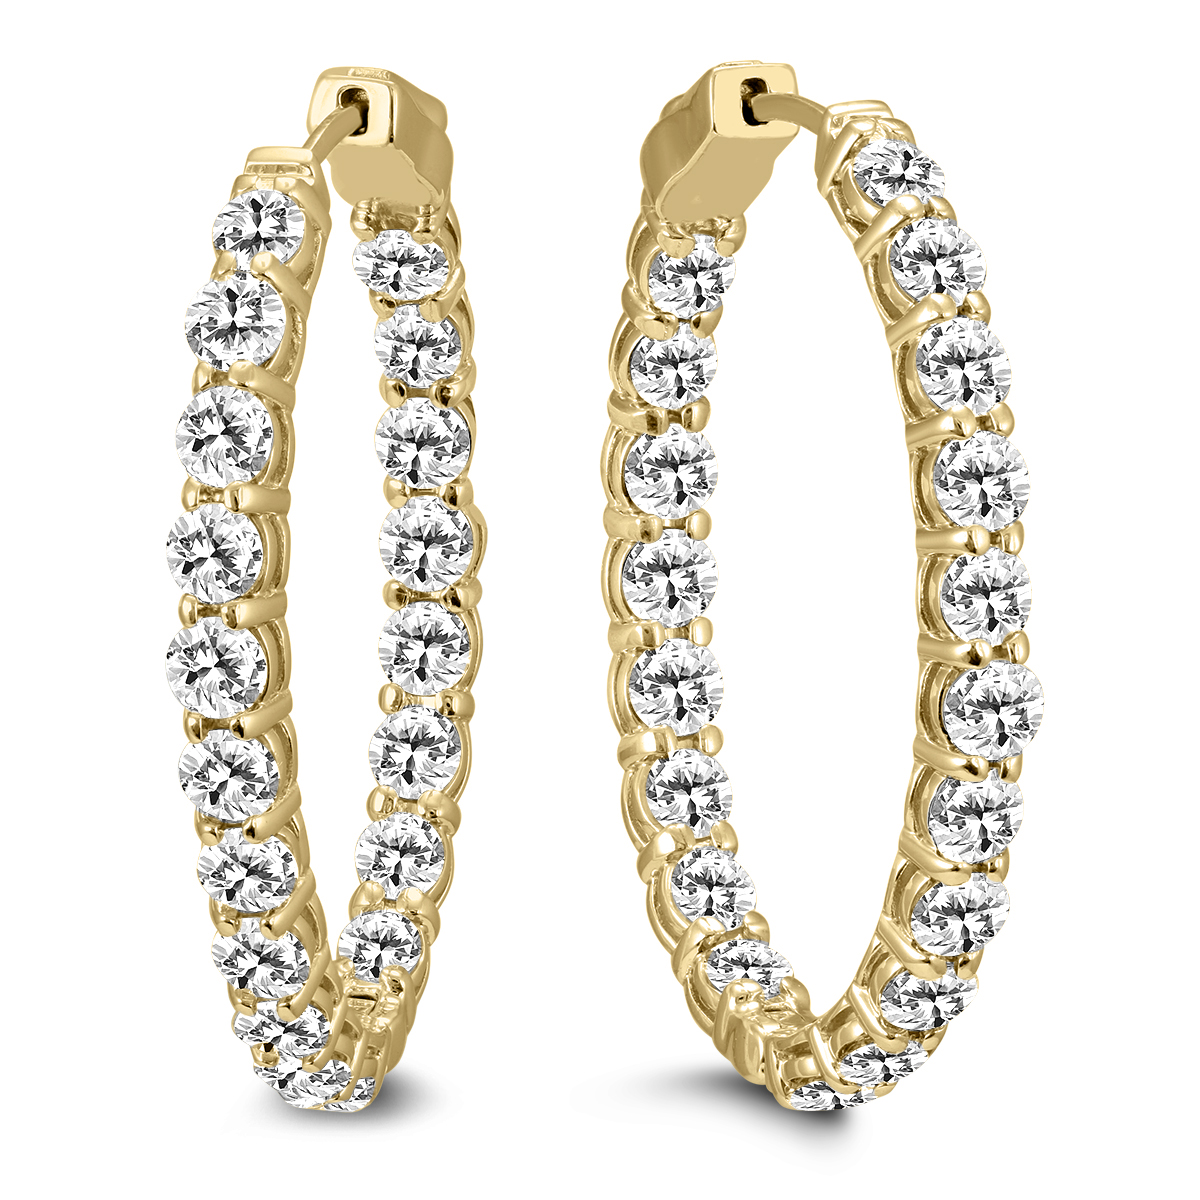 10 Carat TW Oval Diamond Hoop Earrings with Push Button Locks in 14K Yellow Gold